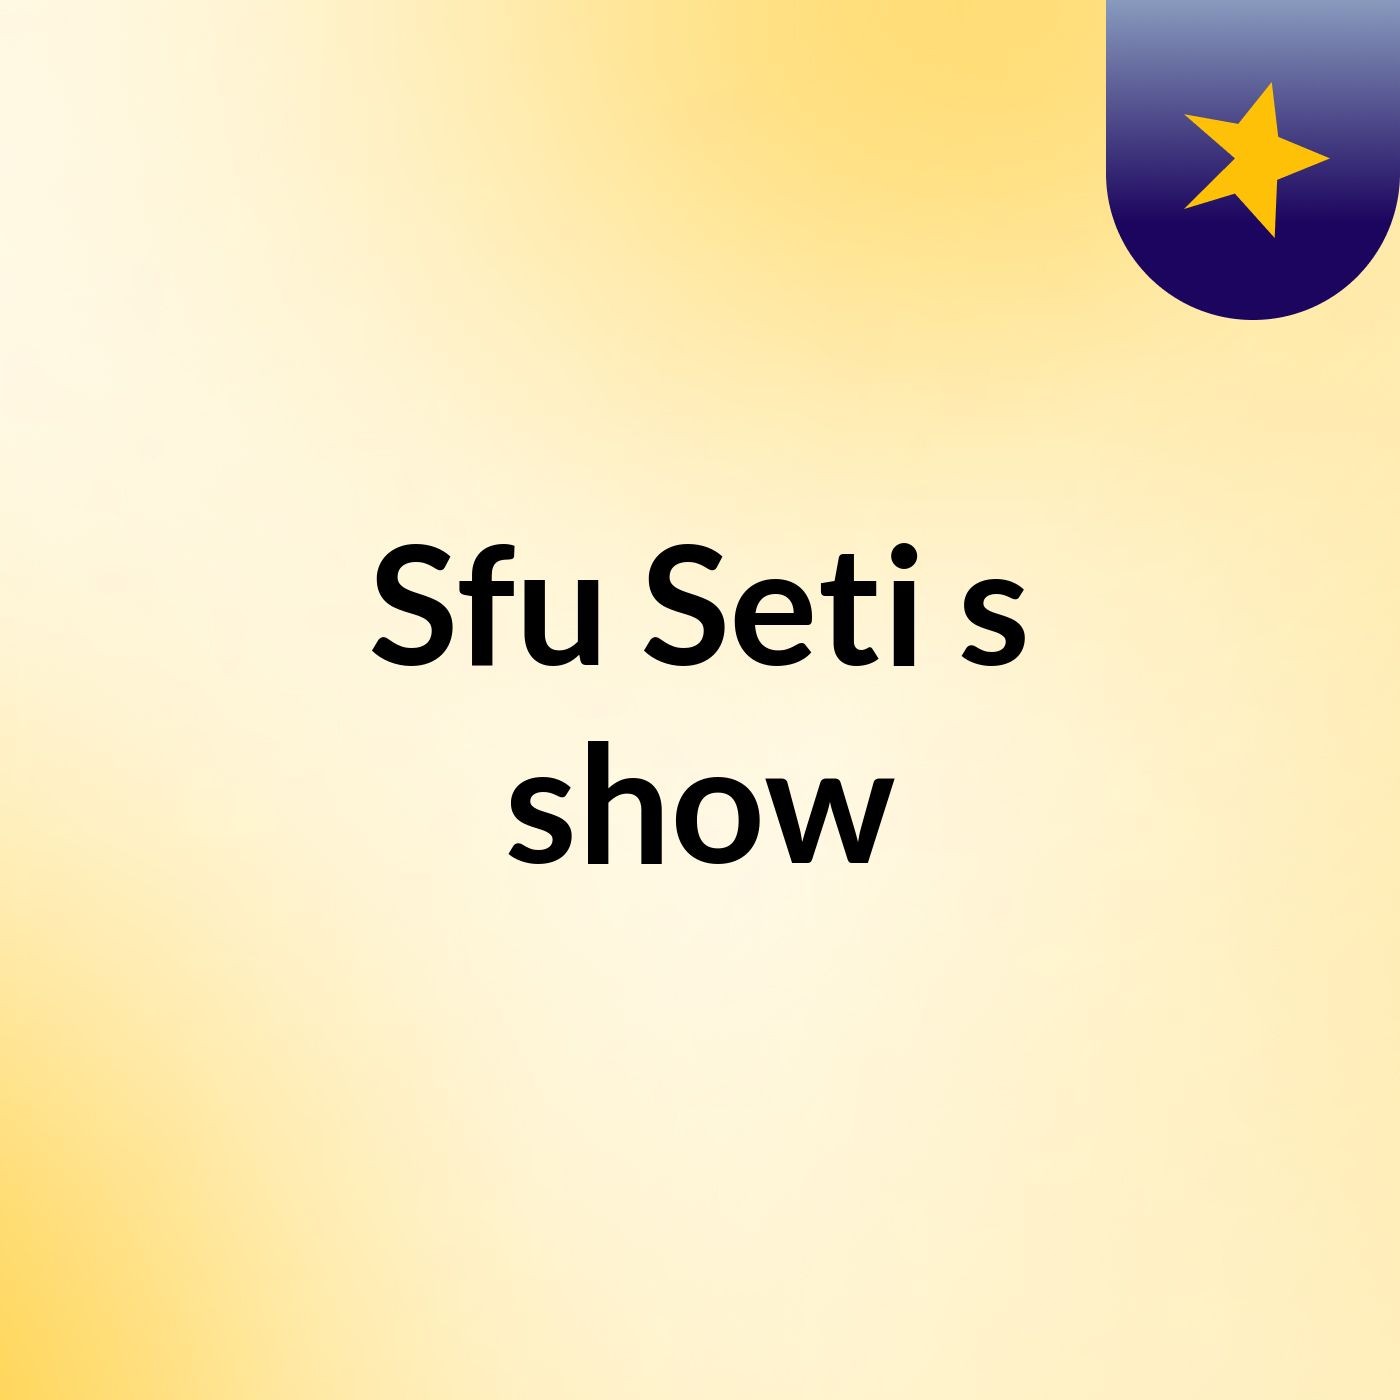 Sfu Seti's show